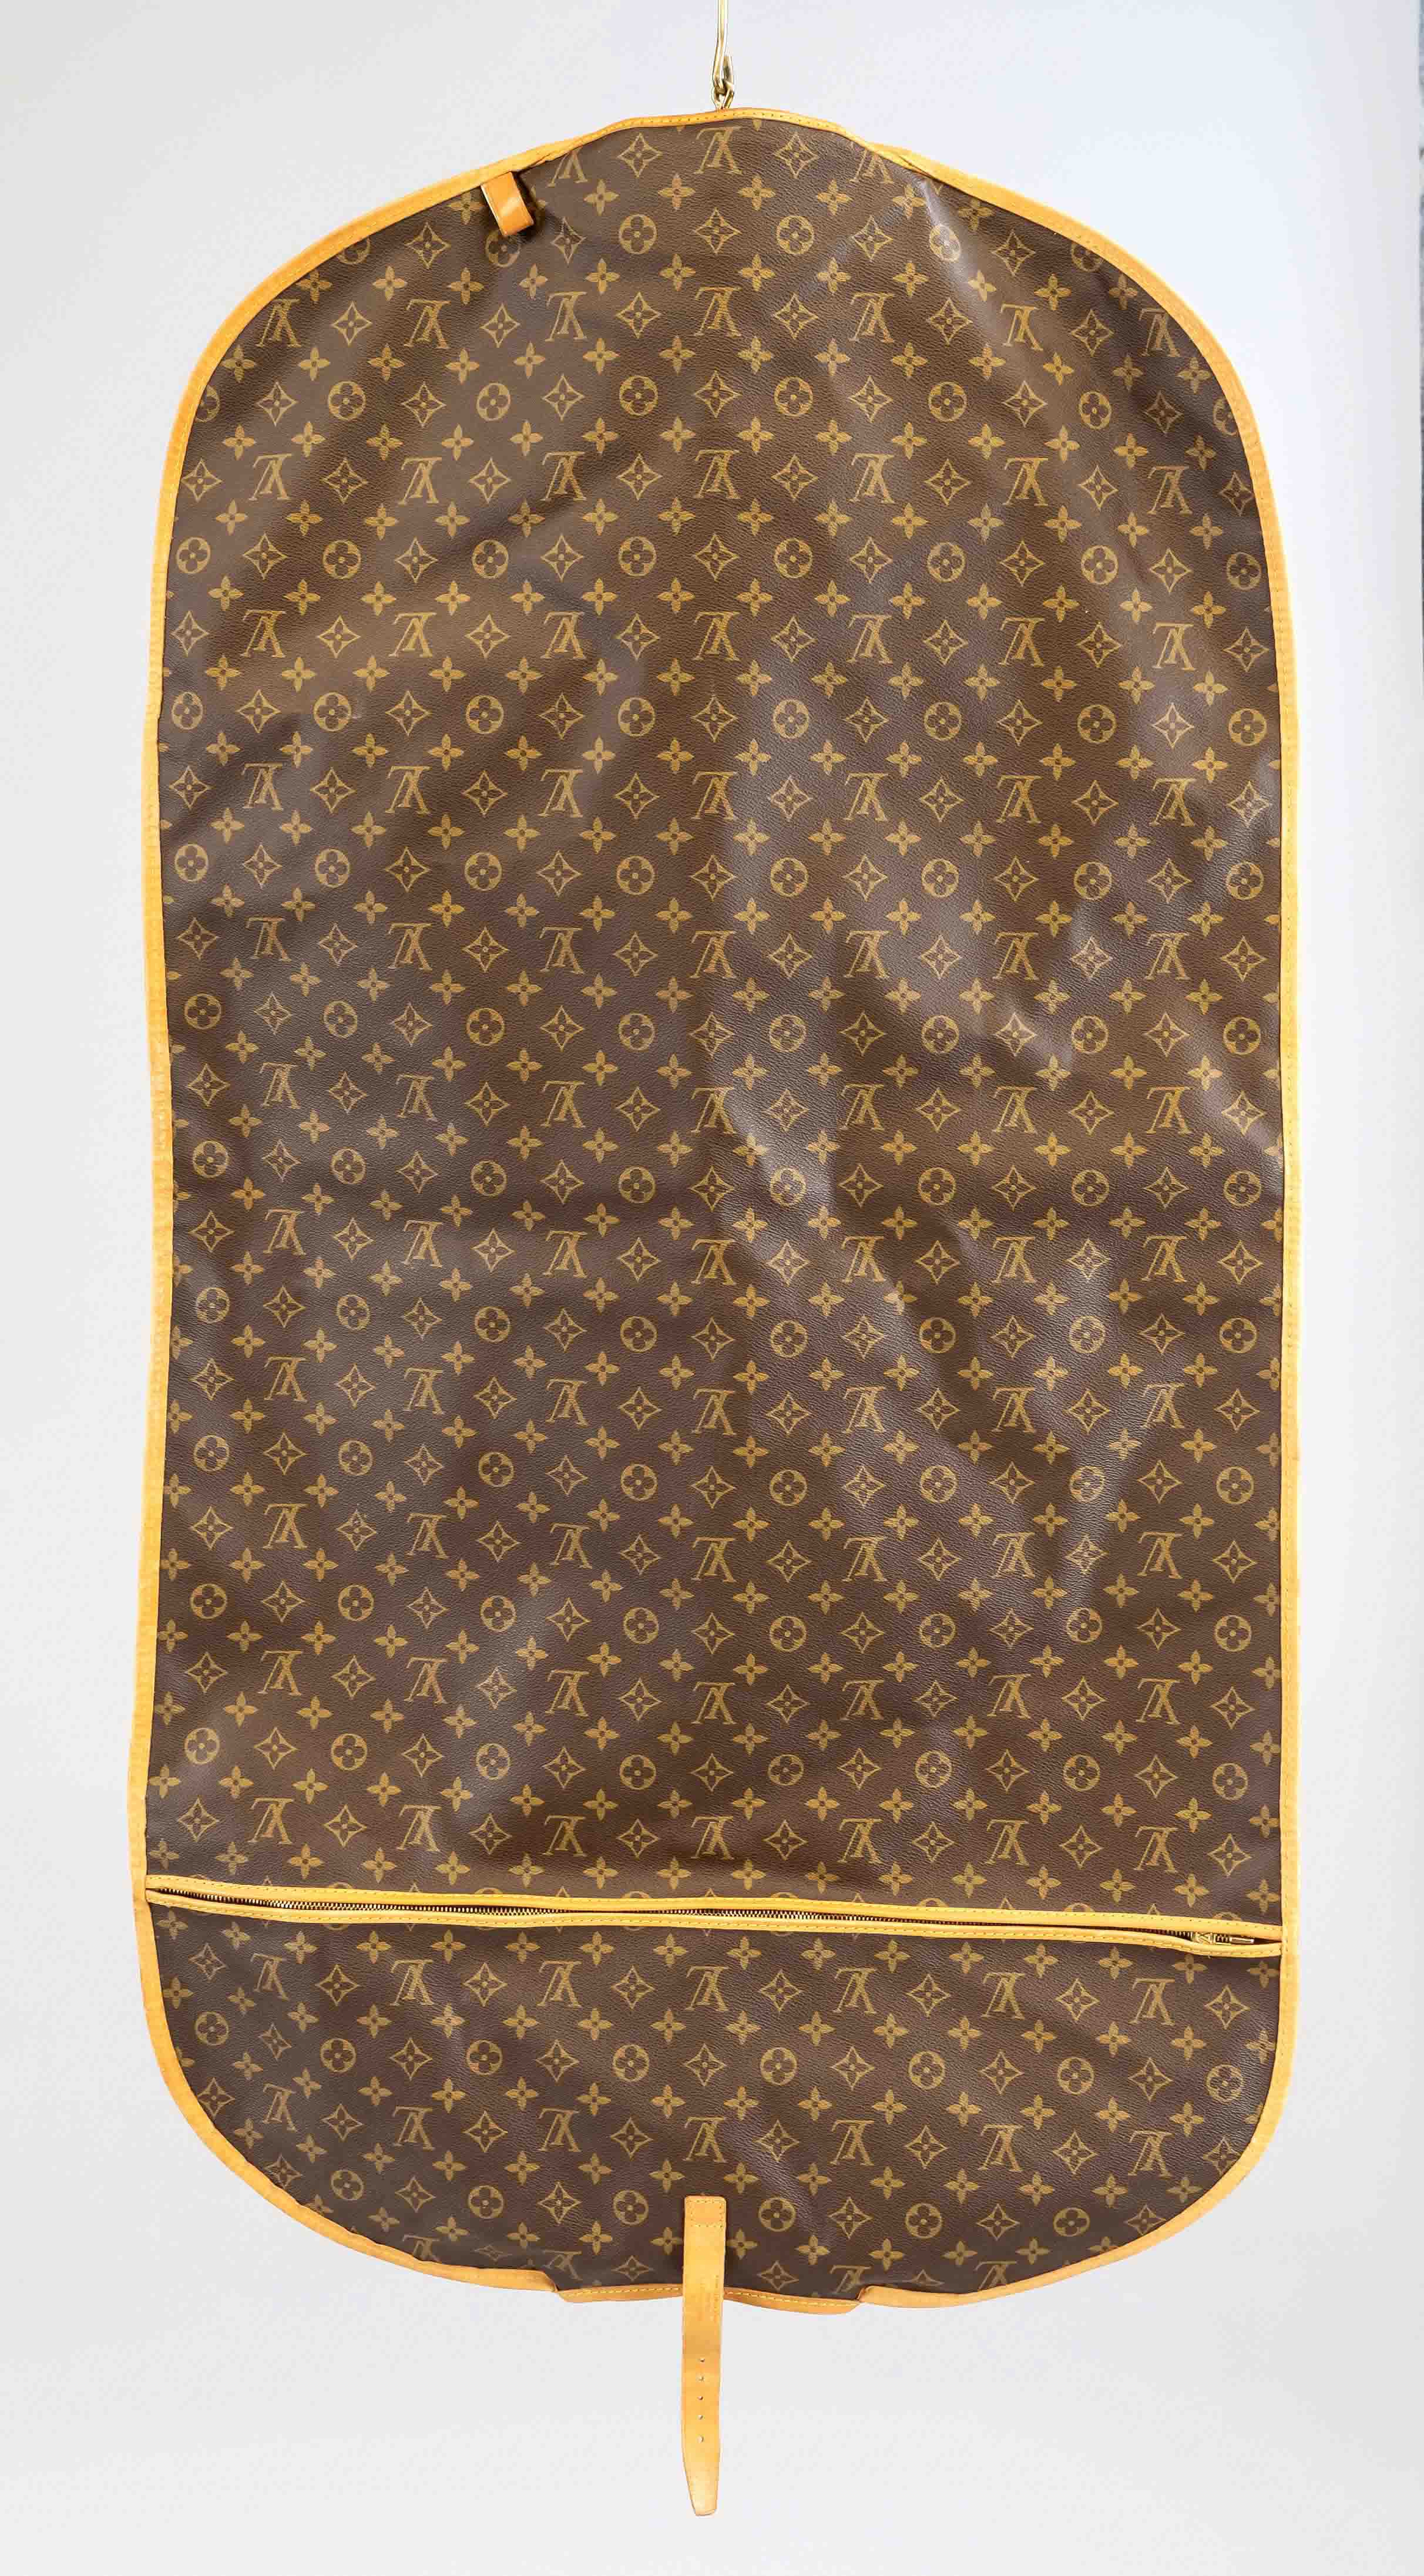 Louis Vuitton, Vintage Monogram Canvas garment bag, rubberized cotton fabric in classic logo print - Image 2 of 2